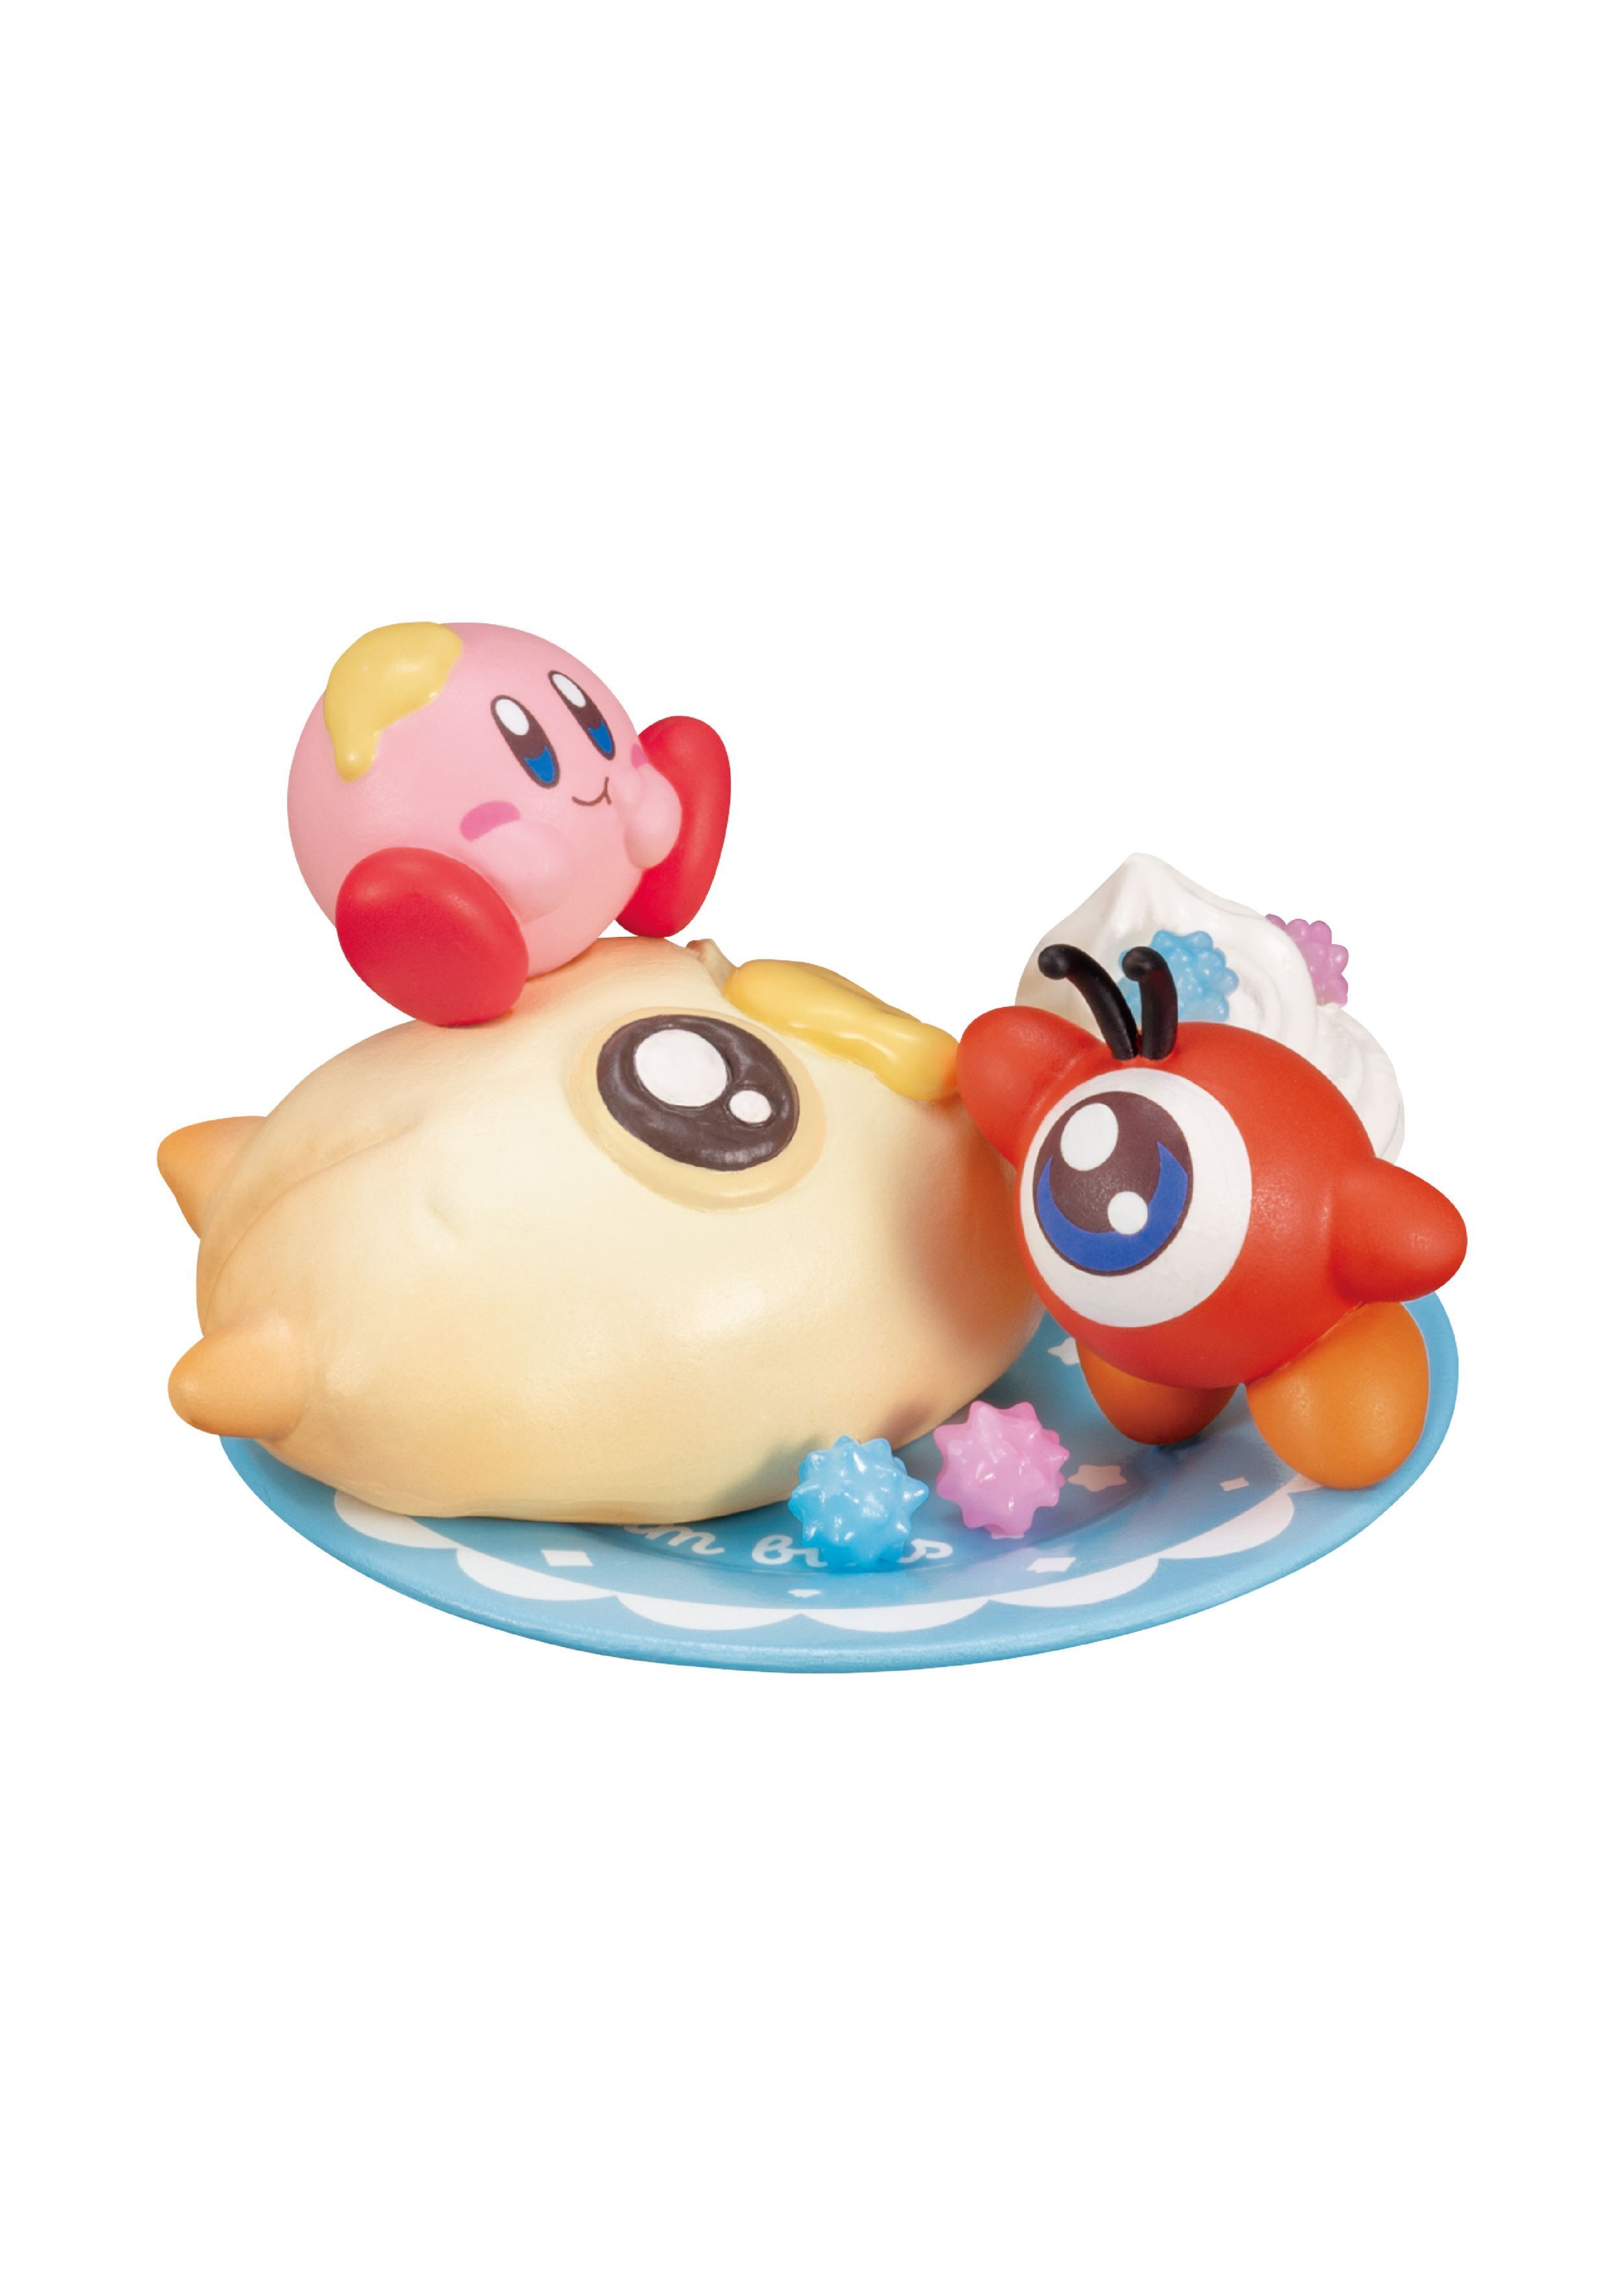 Kirby - Bakery Cafe Blind | Crunchyroll store